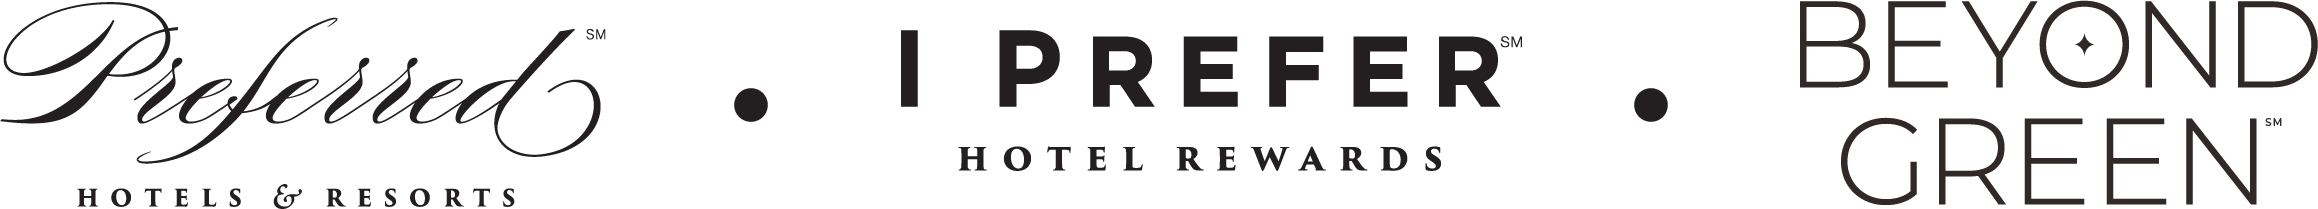 Preferred(SM) HOTELS & RESORTS | I PREFER(SM) HOTEL REWARDS | BEYOND GREEN(SM)